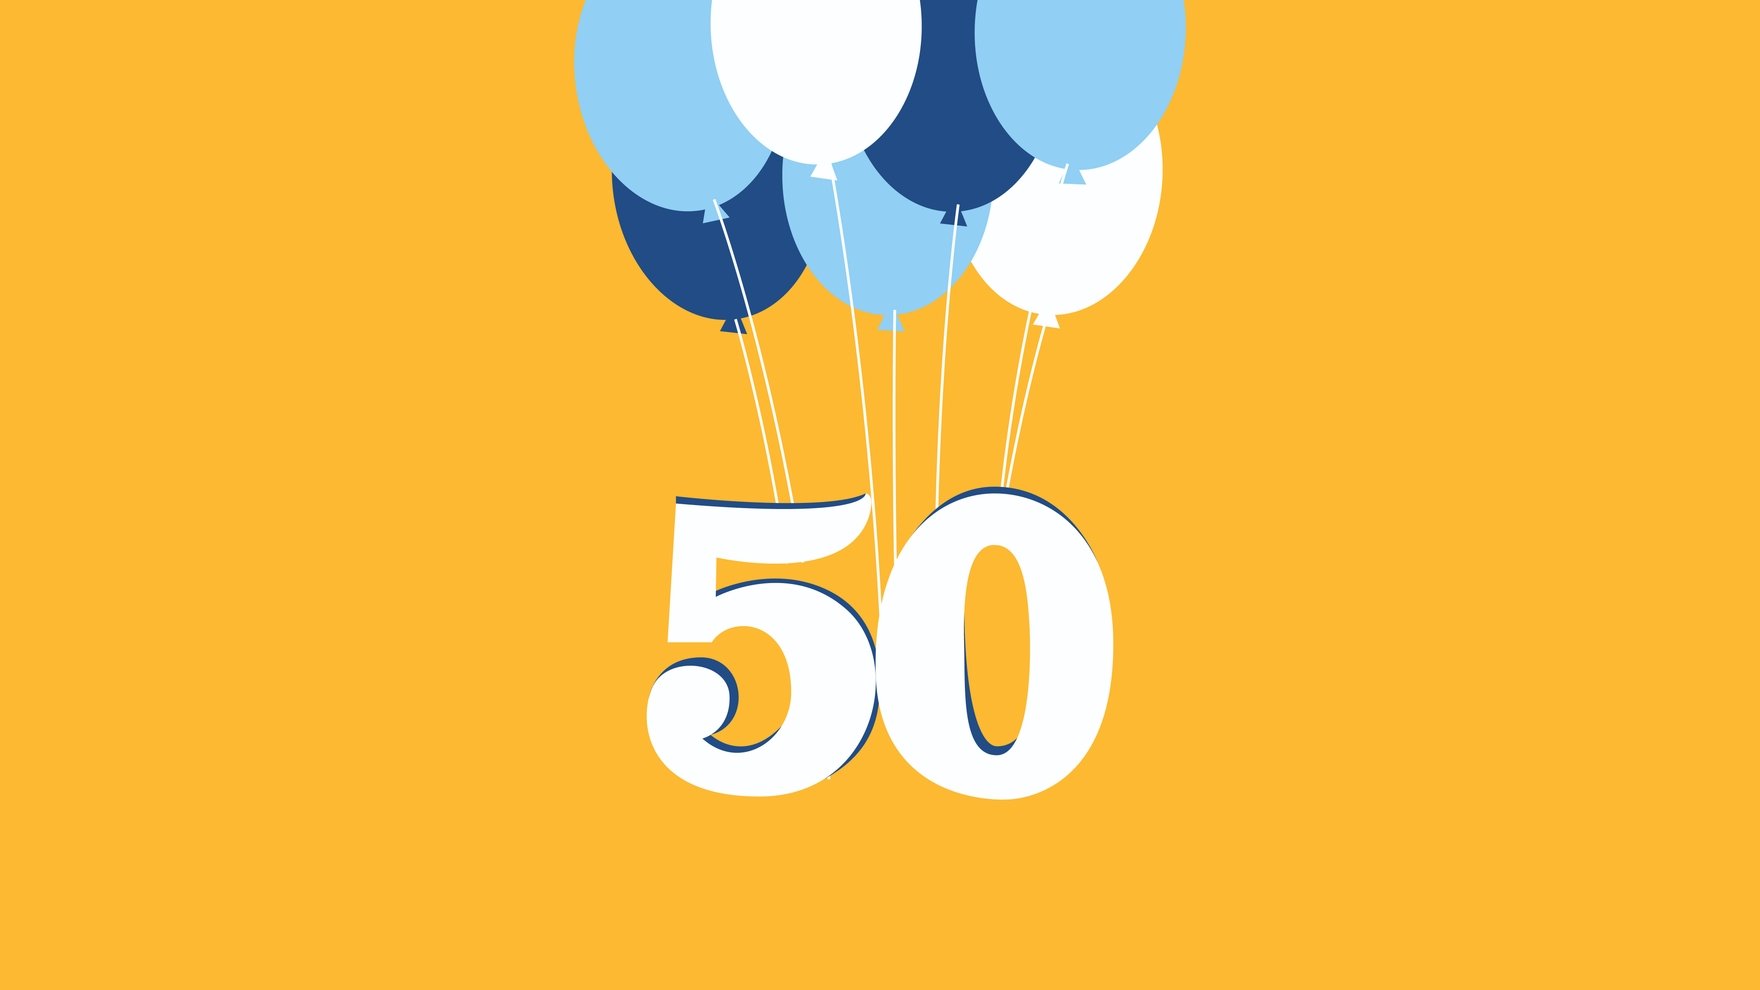 Free 50th Birthday Background in Illustrator, EPS, SVG, JPG, PNG